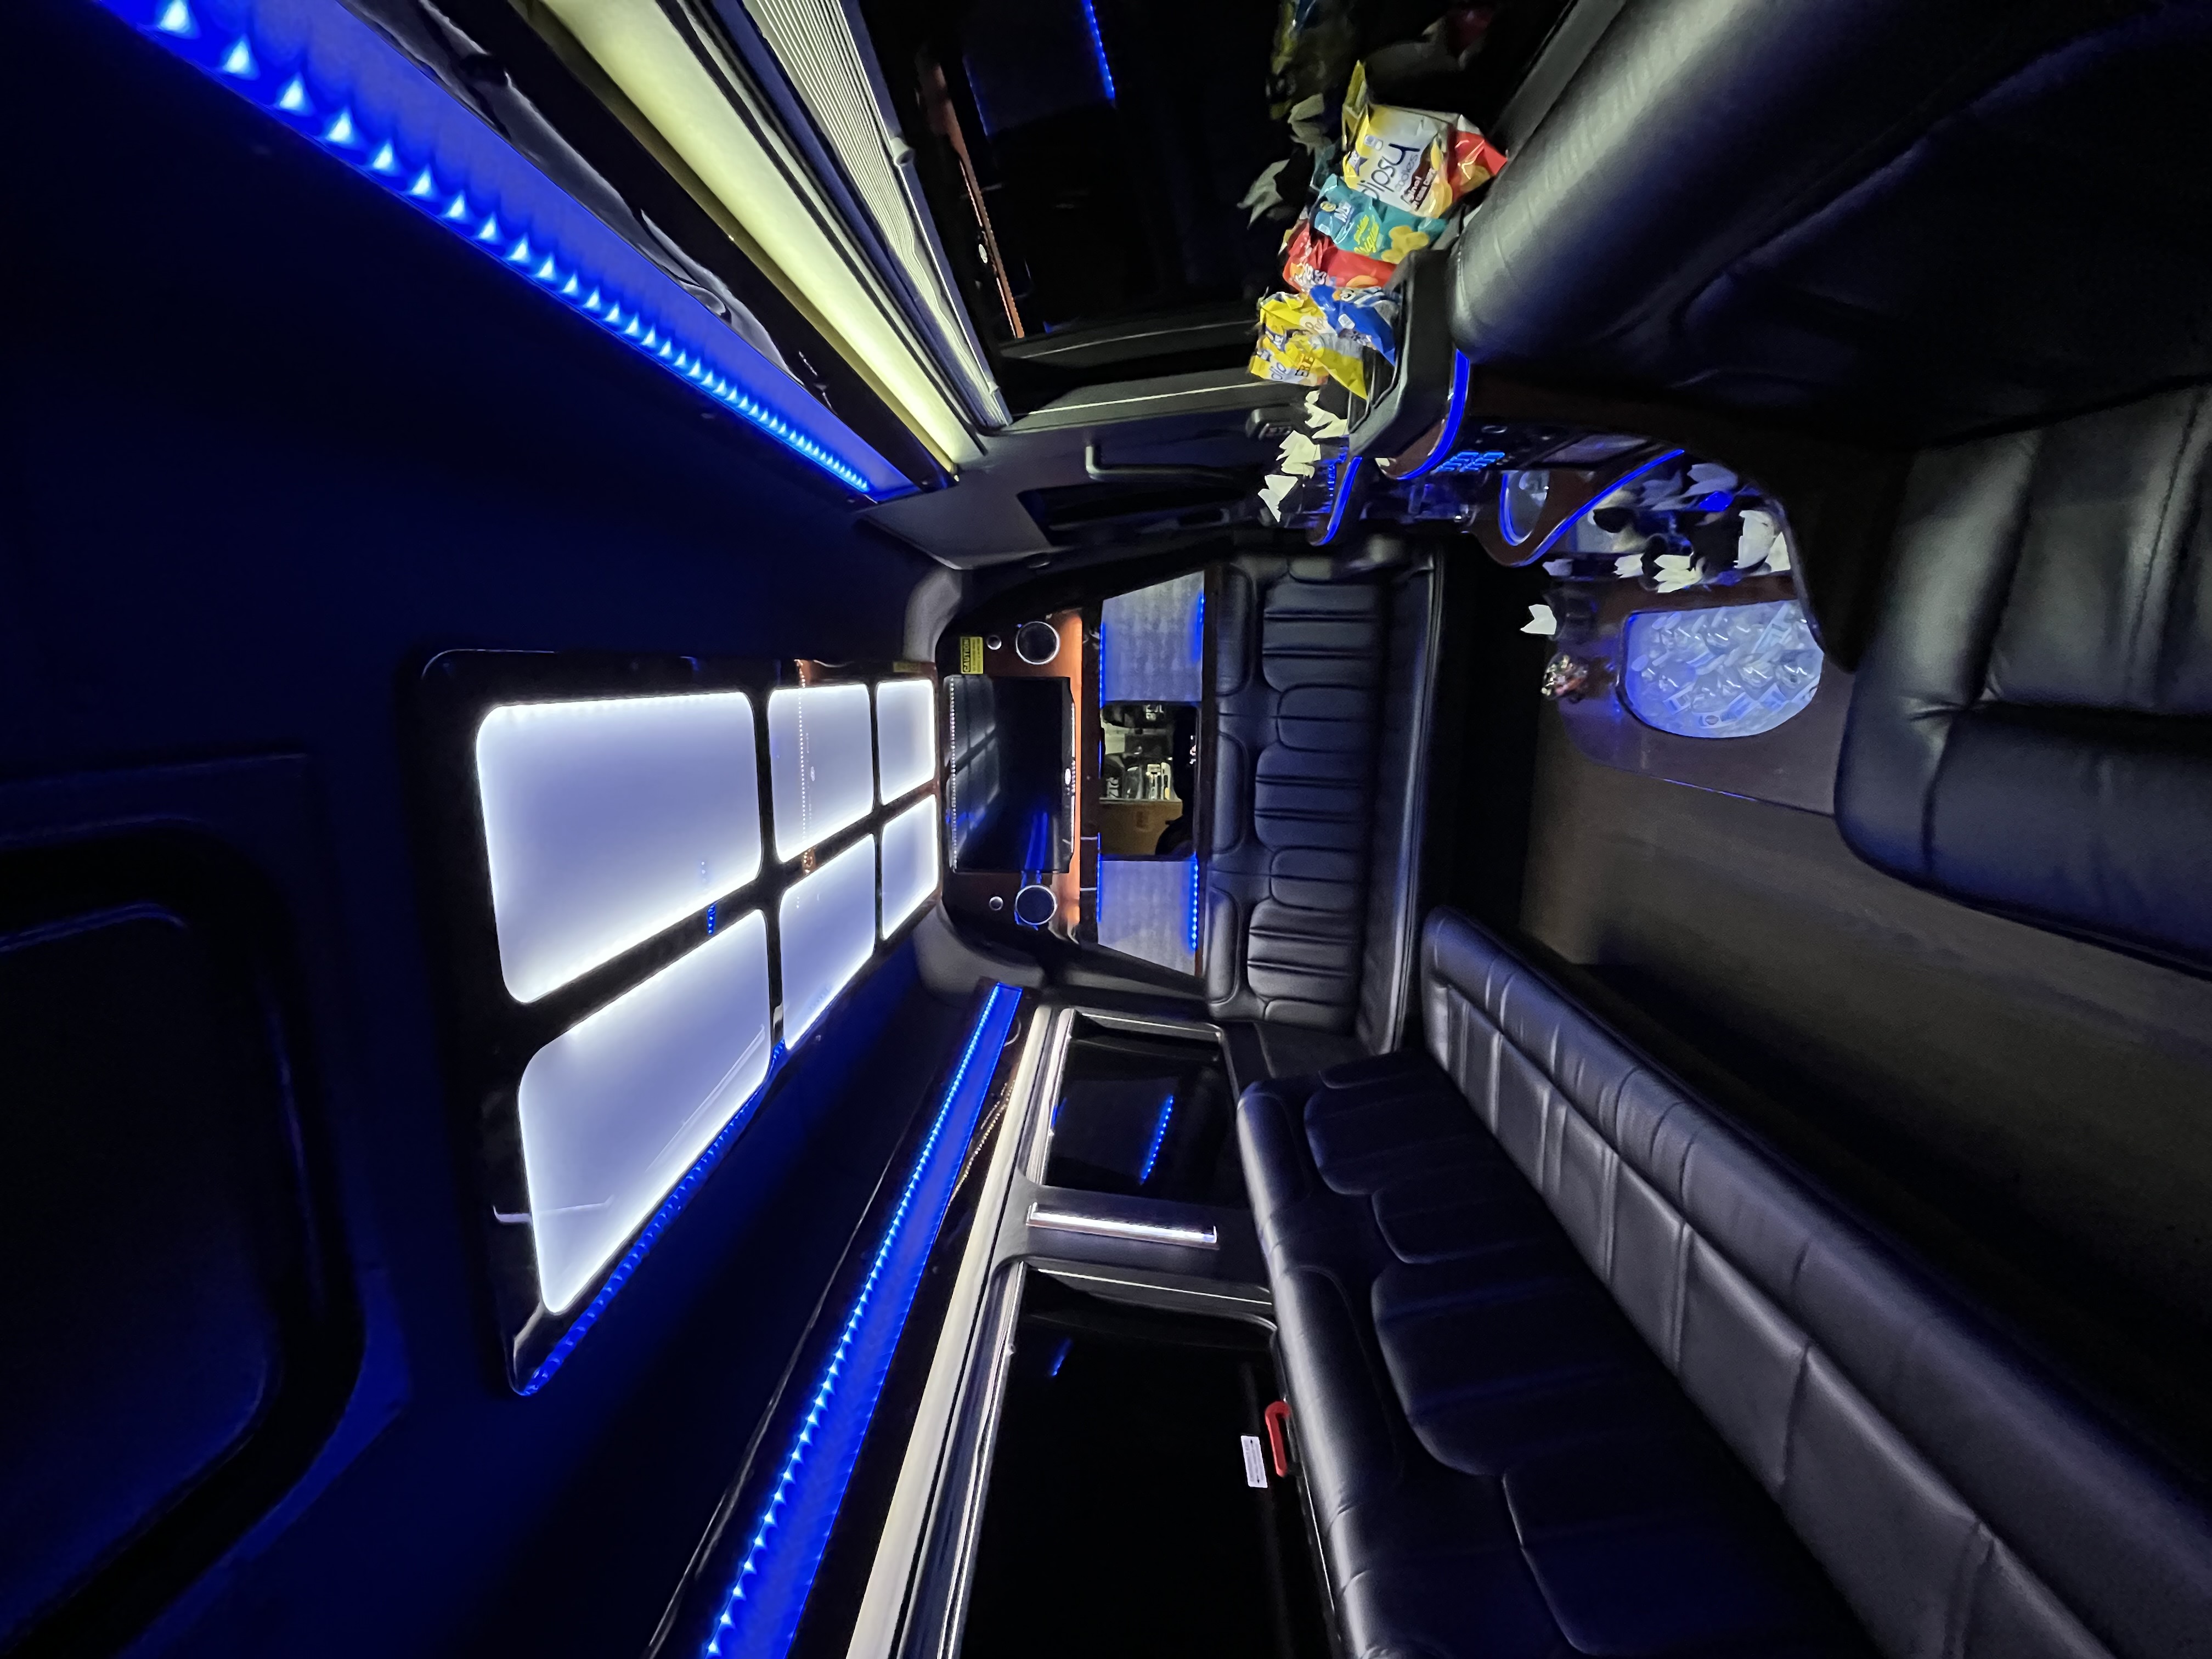 716 Limousine Fleet - gallery image of 14 pax luxury limo buses